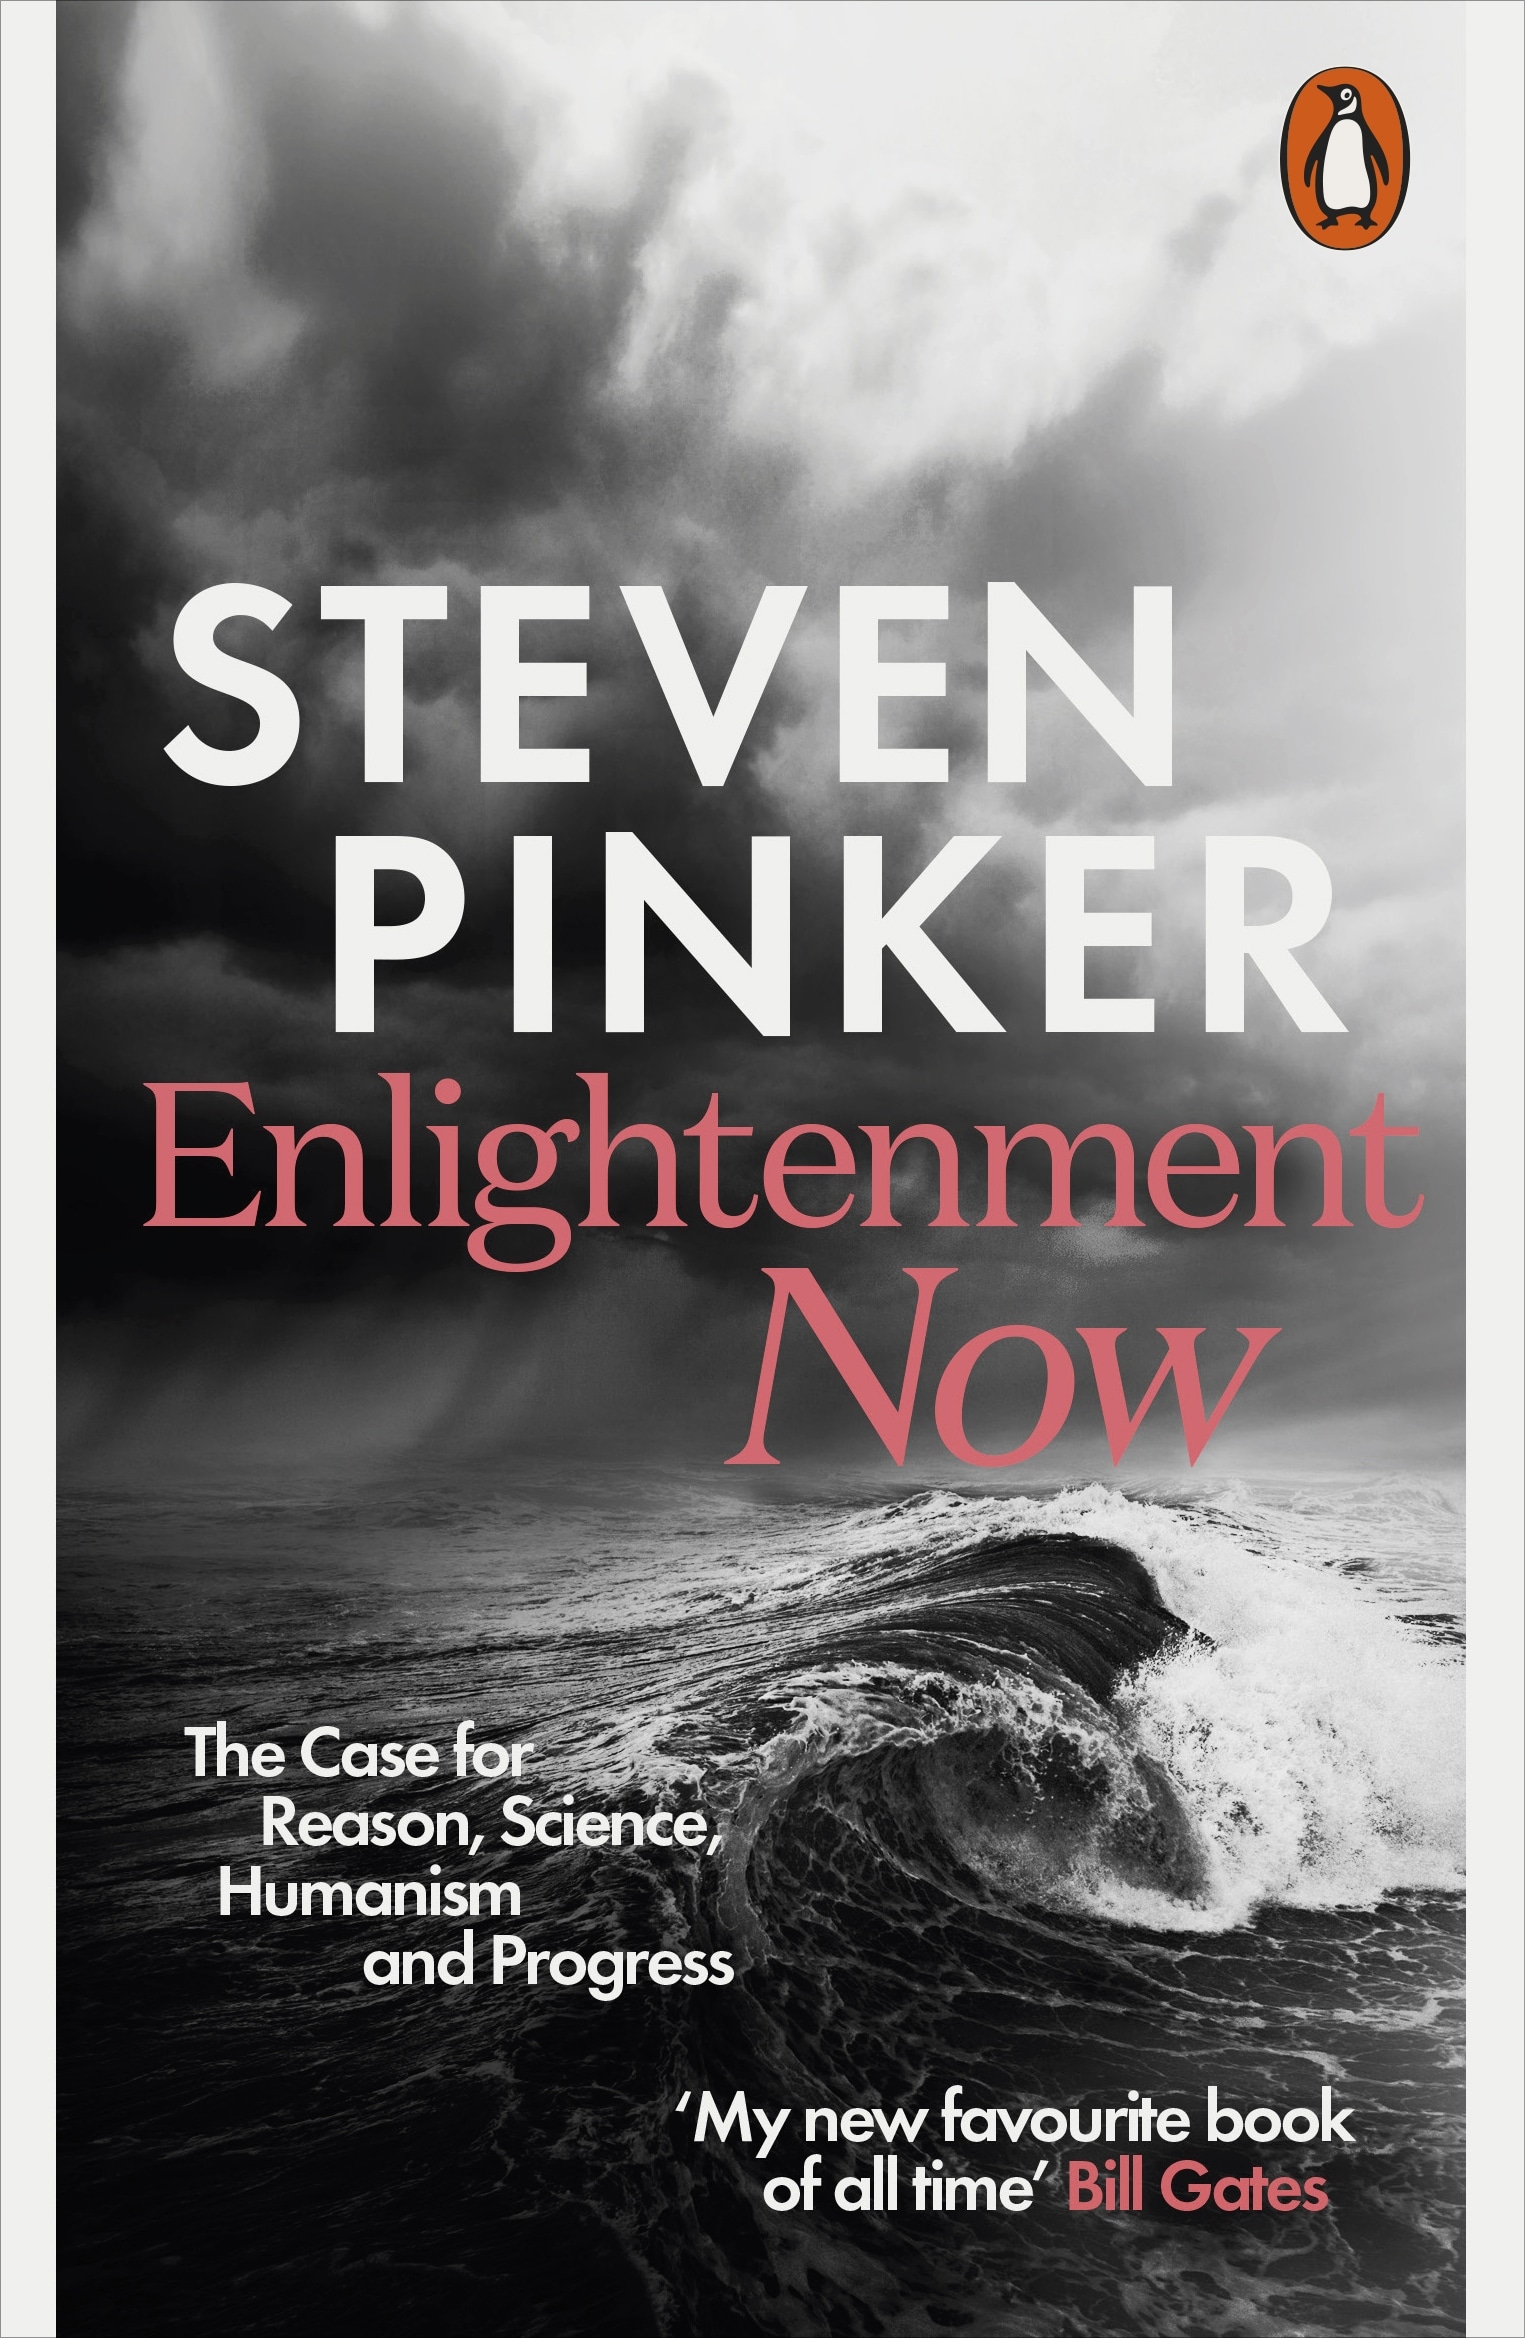 Book “Enlightenment Now” by Steven Pinker